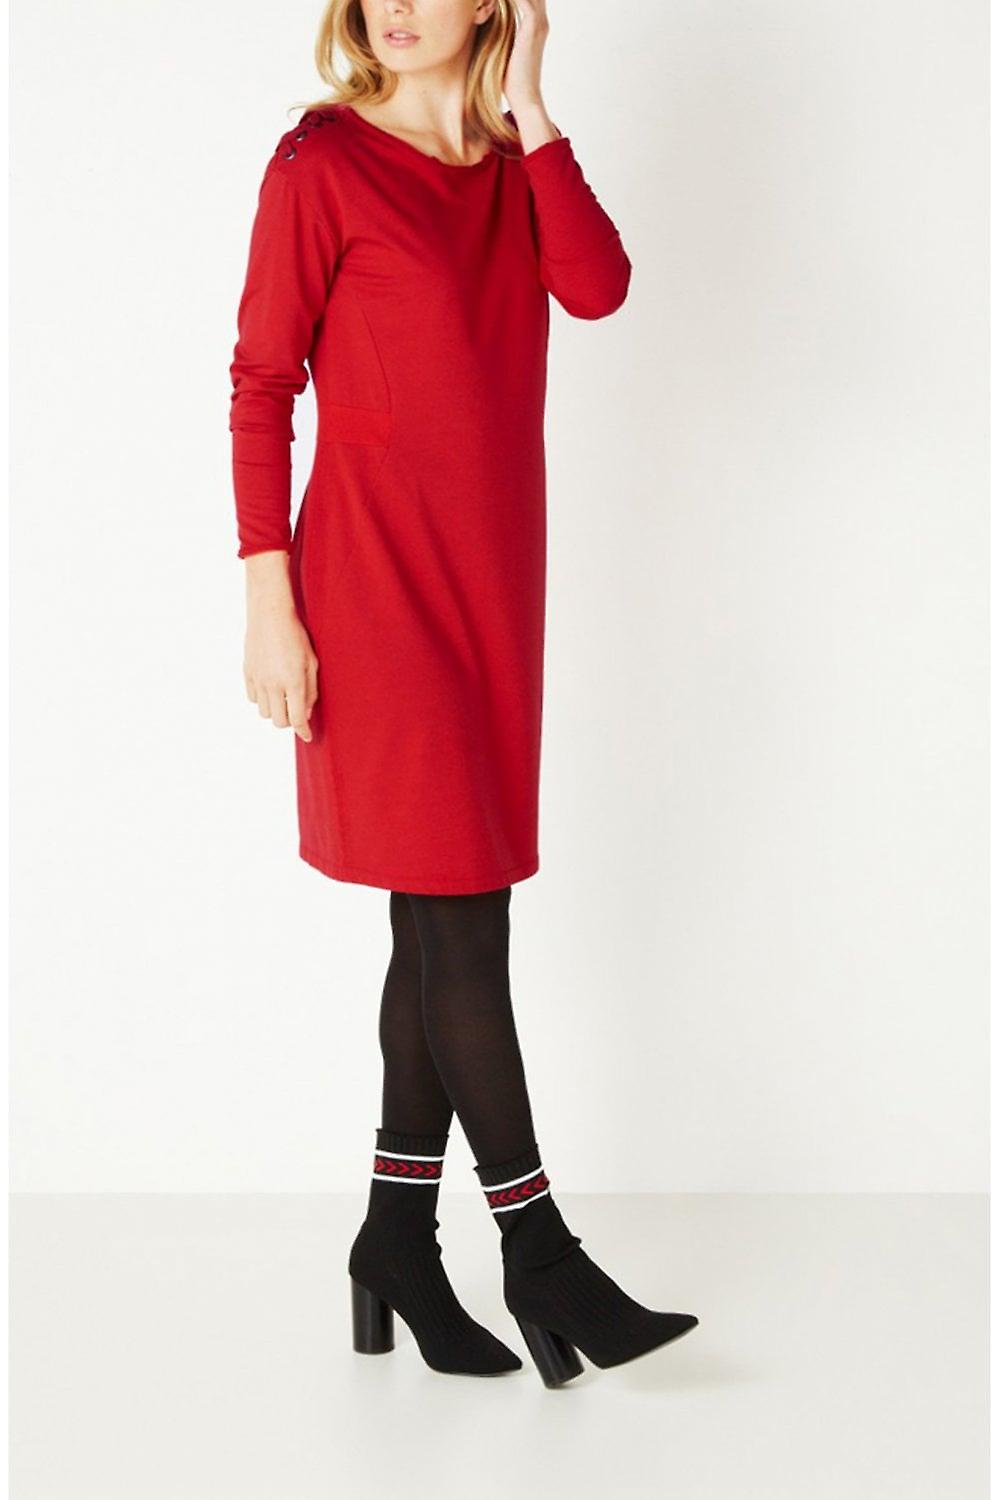 maniac willekeurig Prestigieus Sandwich jurk sweater met lace up schouder rood - Vegas For Her jurk  Diverse JippieJurk